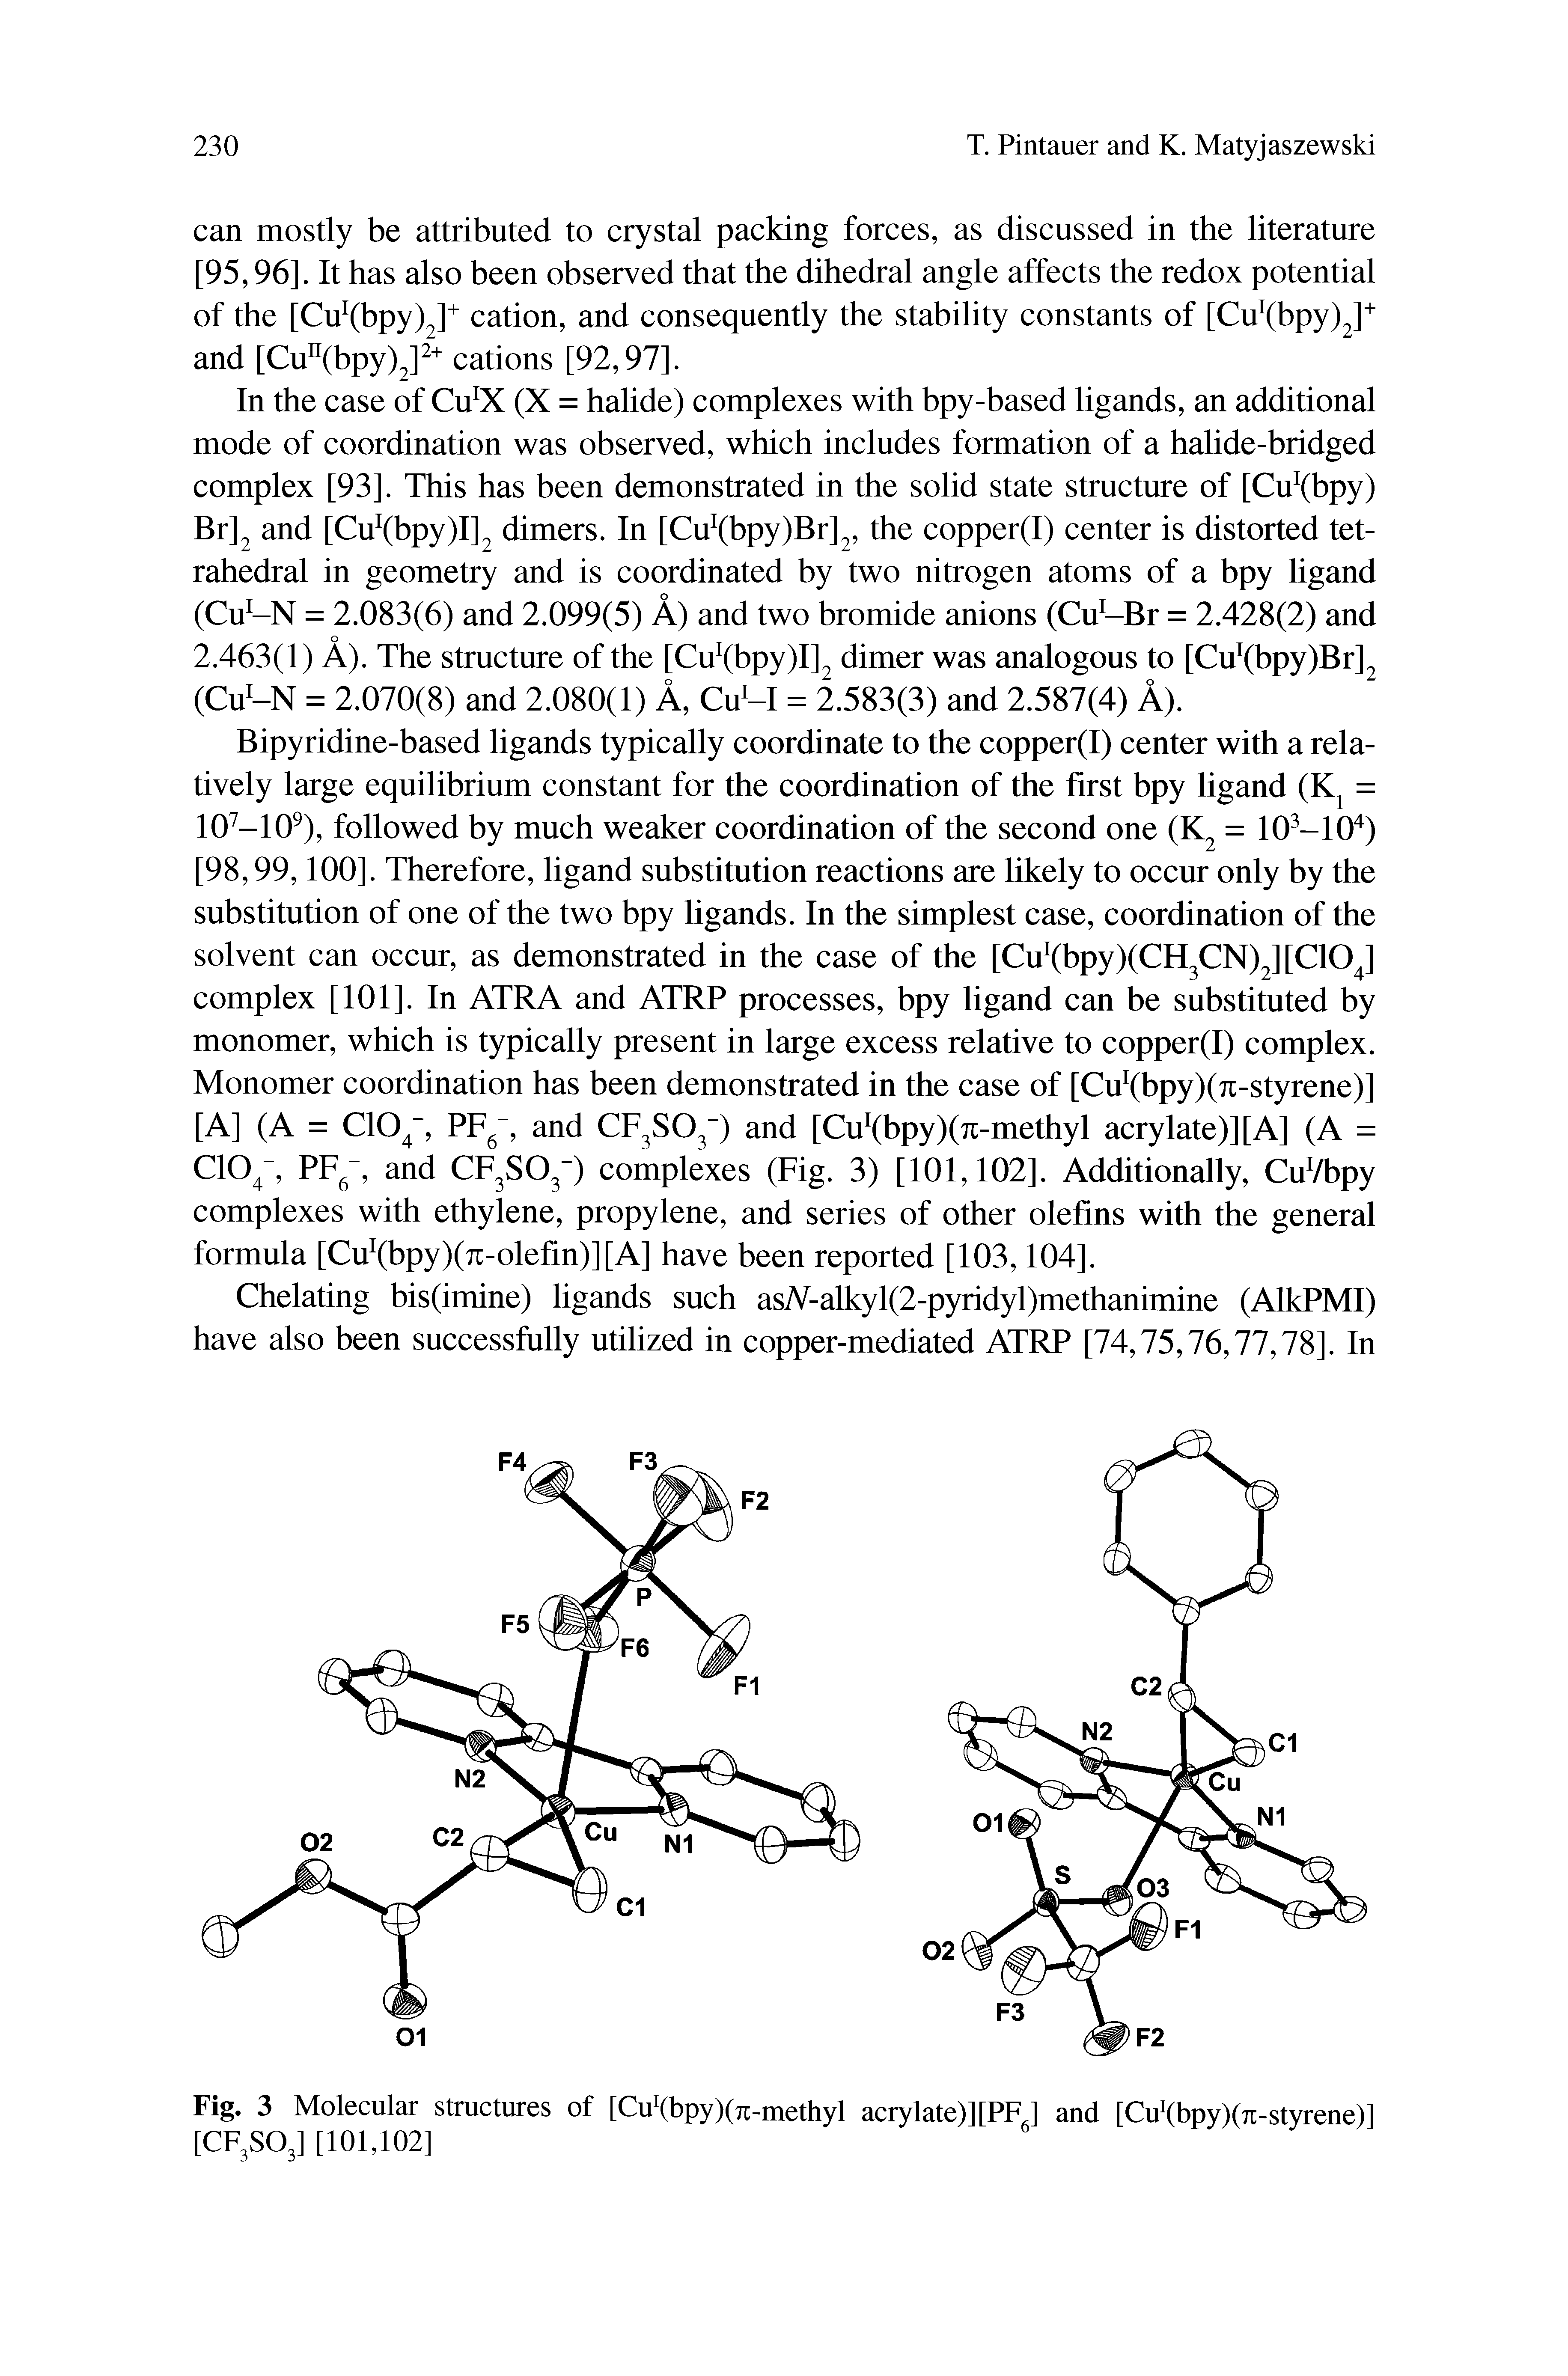 Fig. 3 Molecular structures of [Cu pyKjc-methyl acrylate)] [PFJ and [CuI(bpy)(7i-styrene)] [CF3SCy [101,102]...